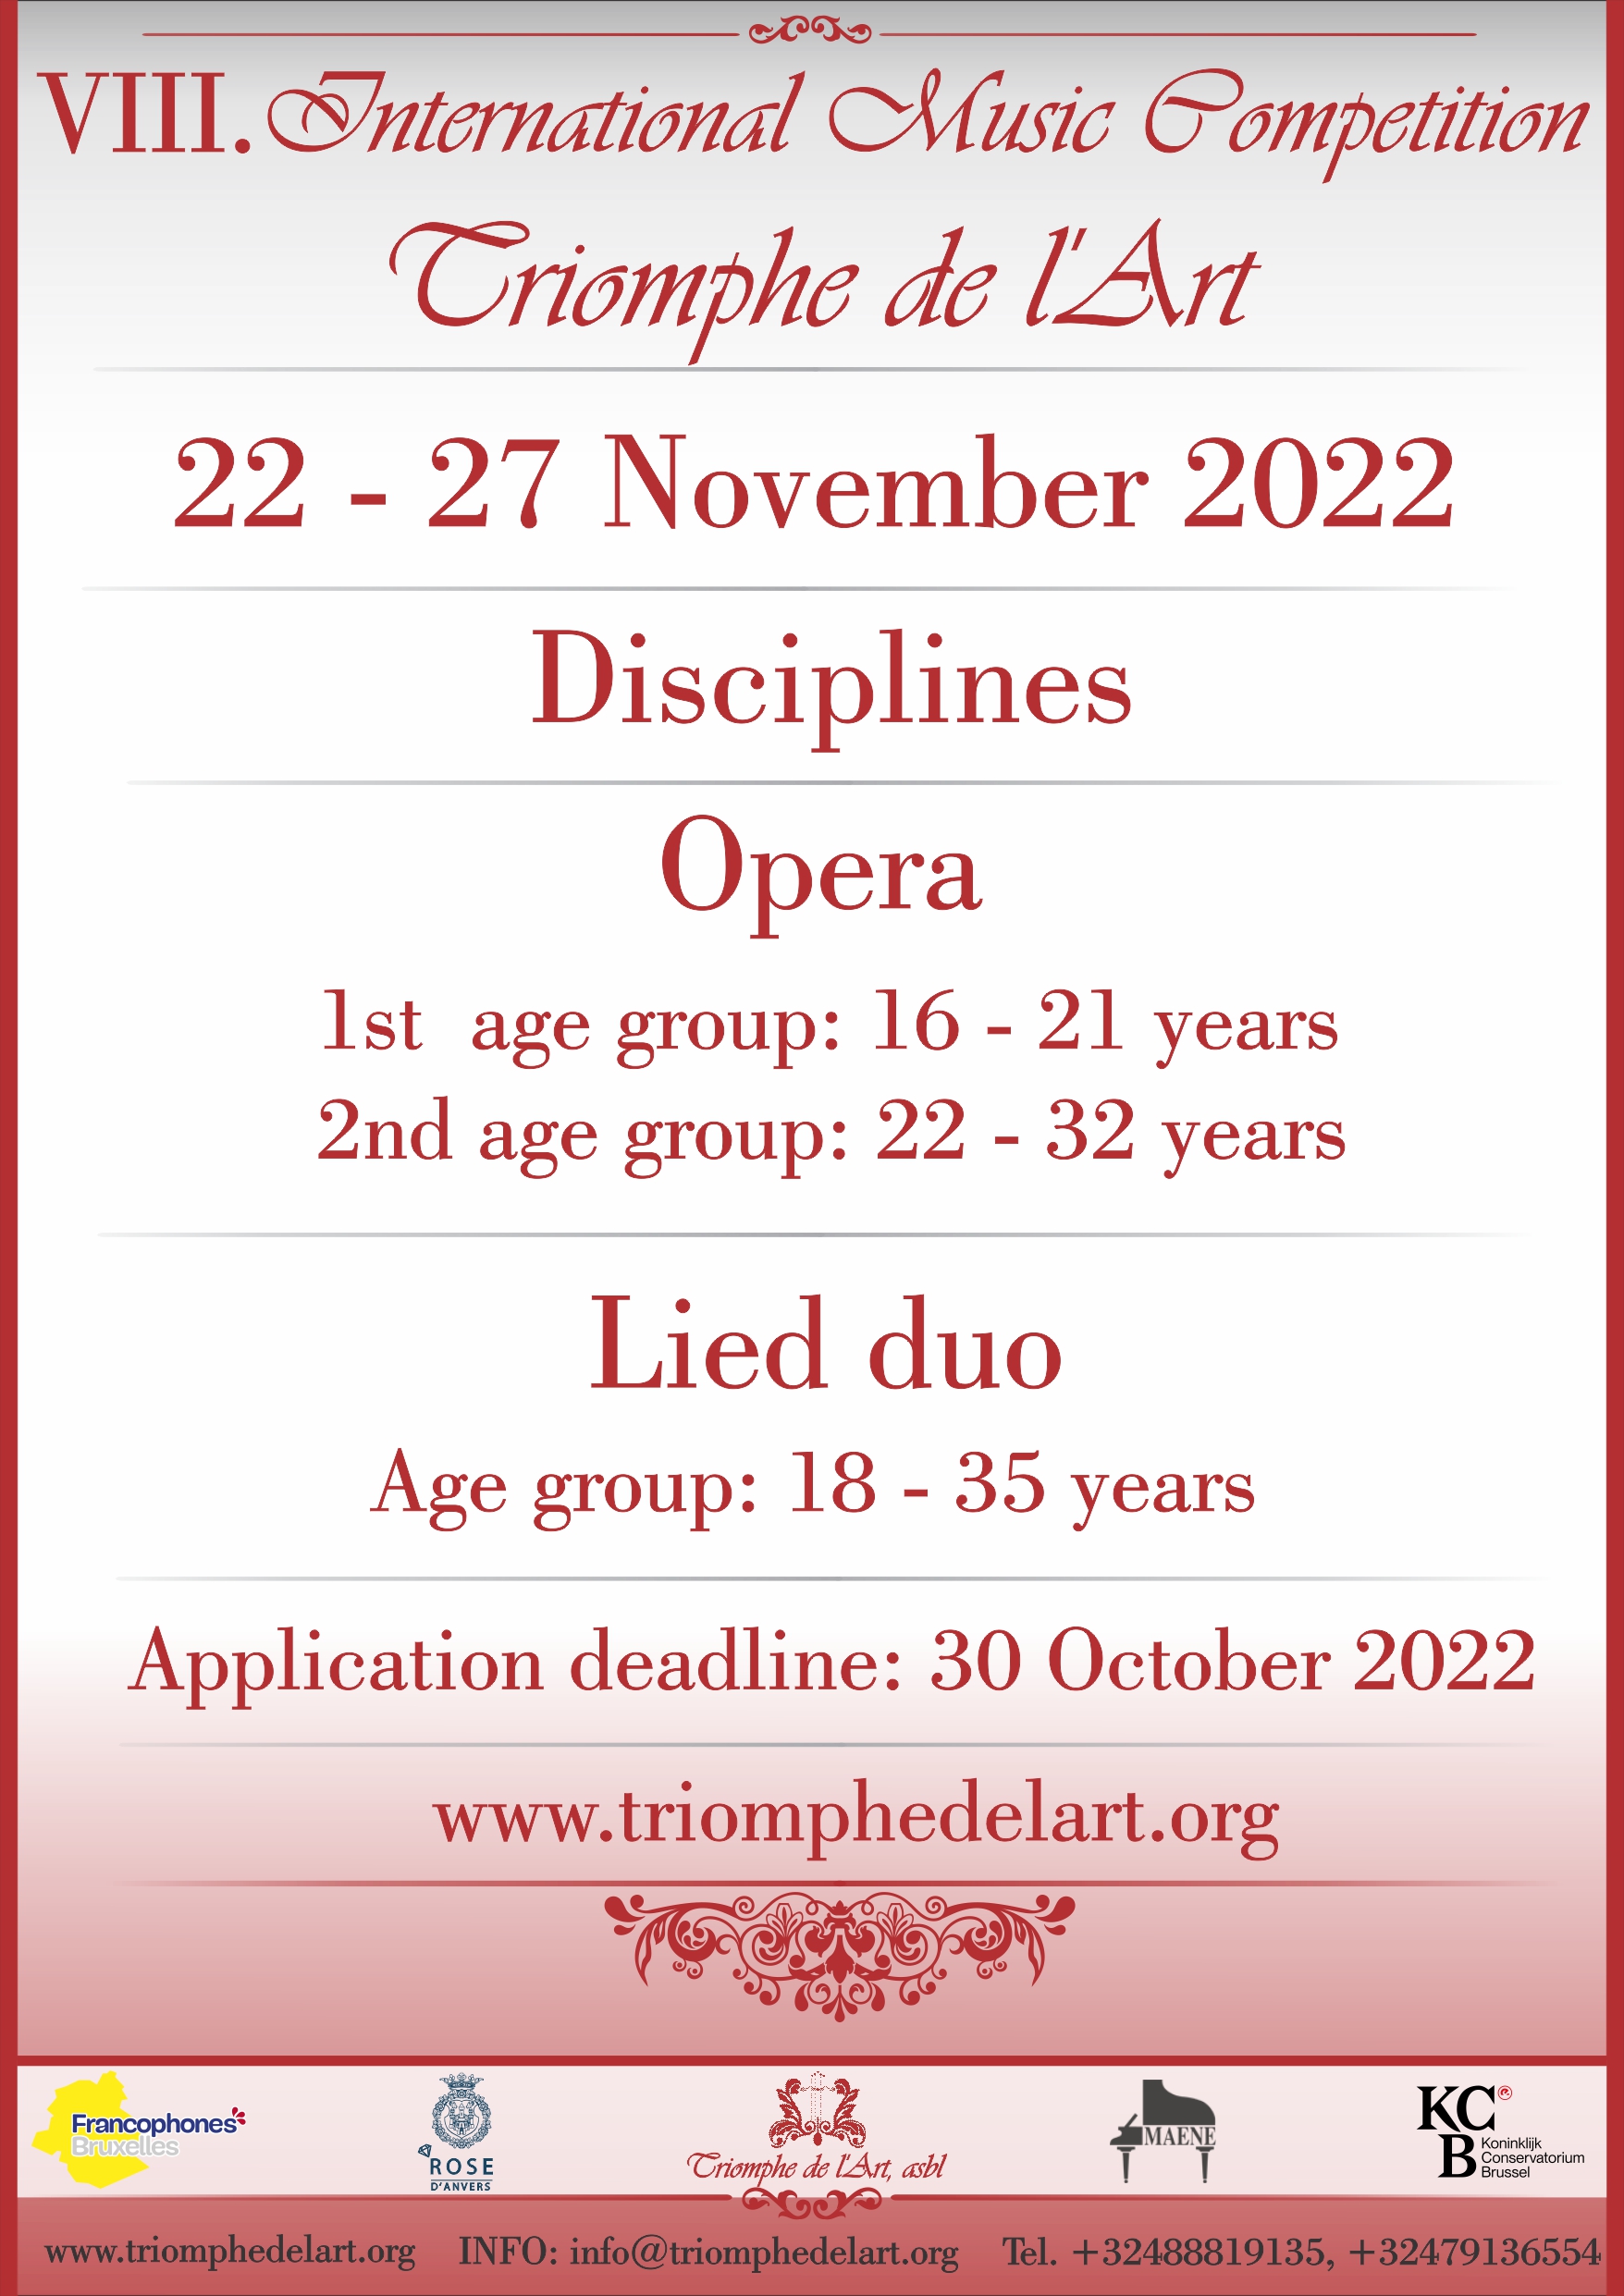 Triomphe de l'Art competition 2022 Opera & Lied duo